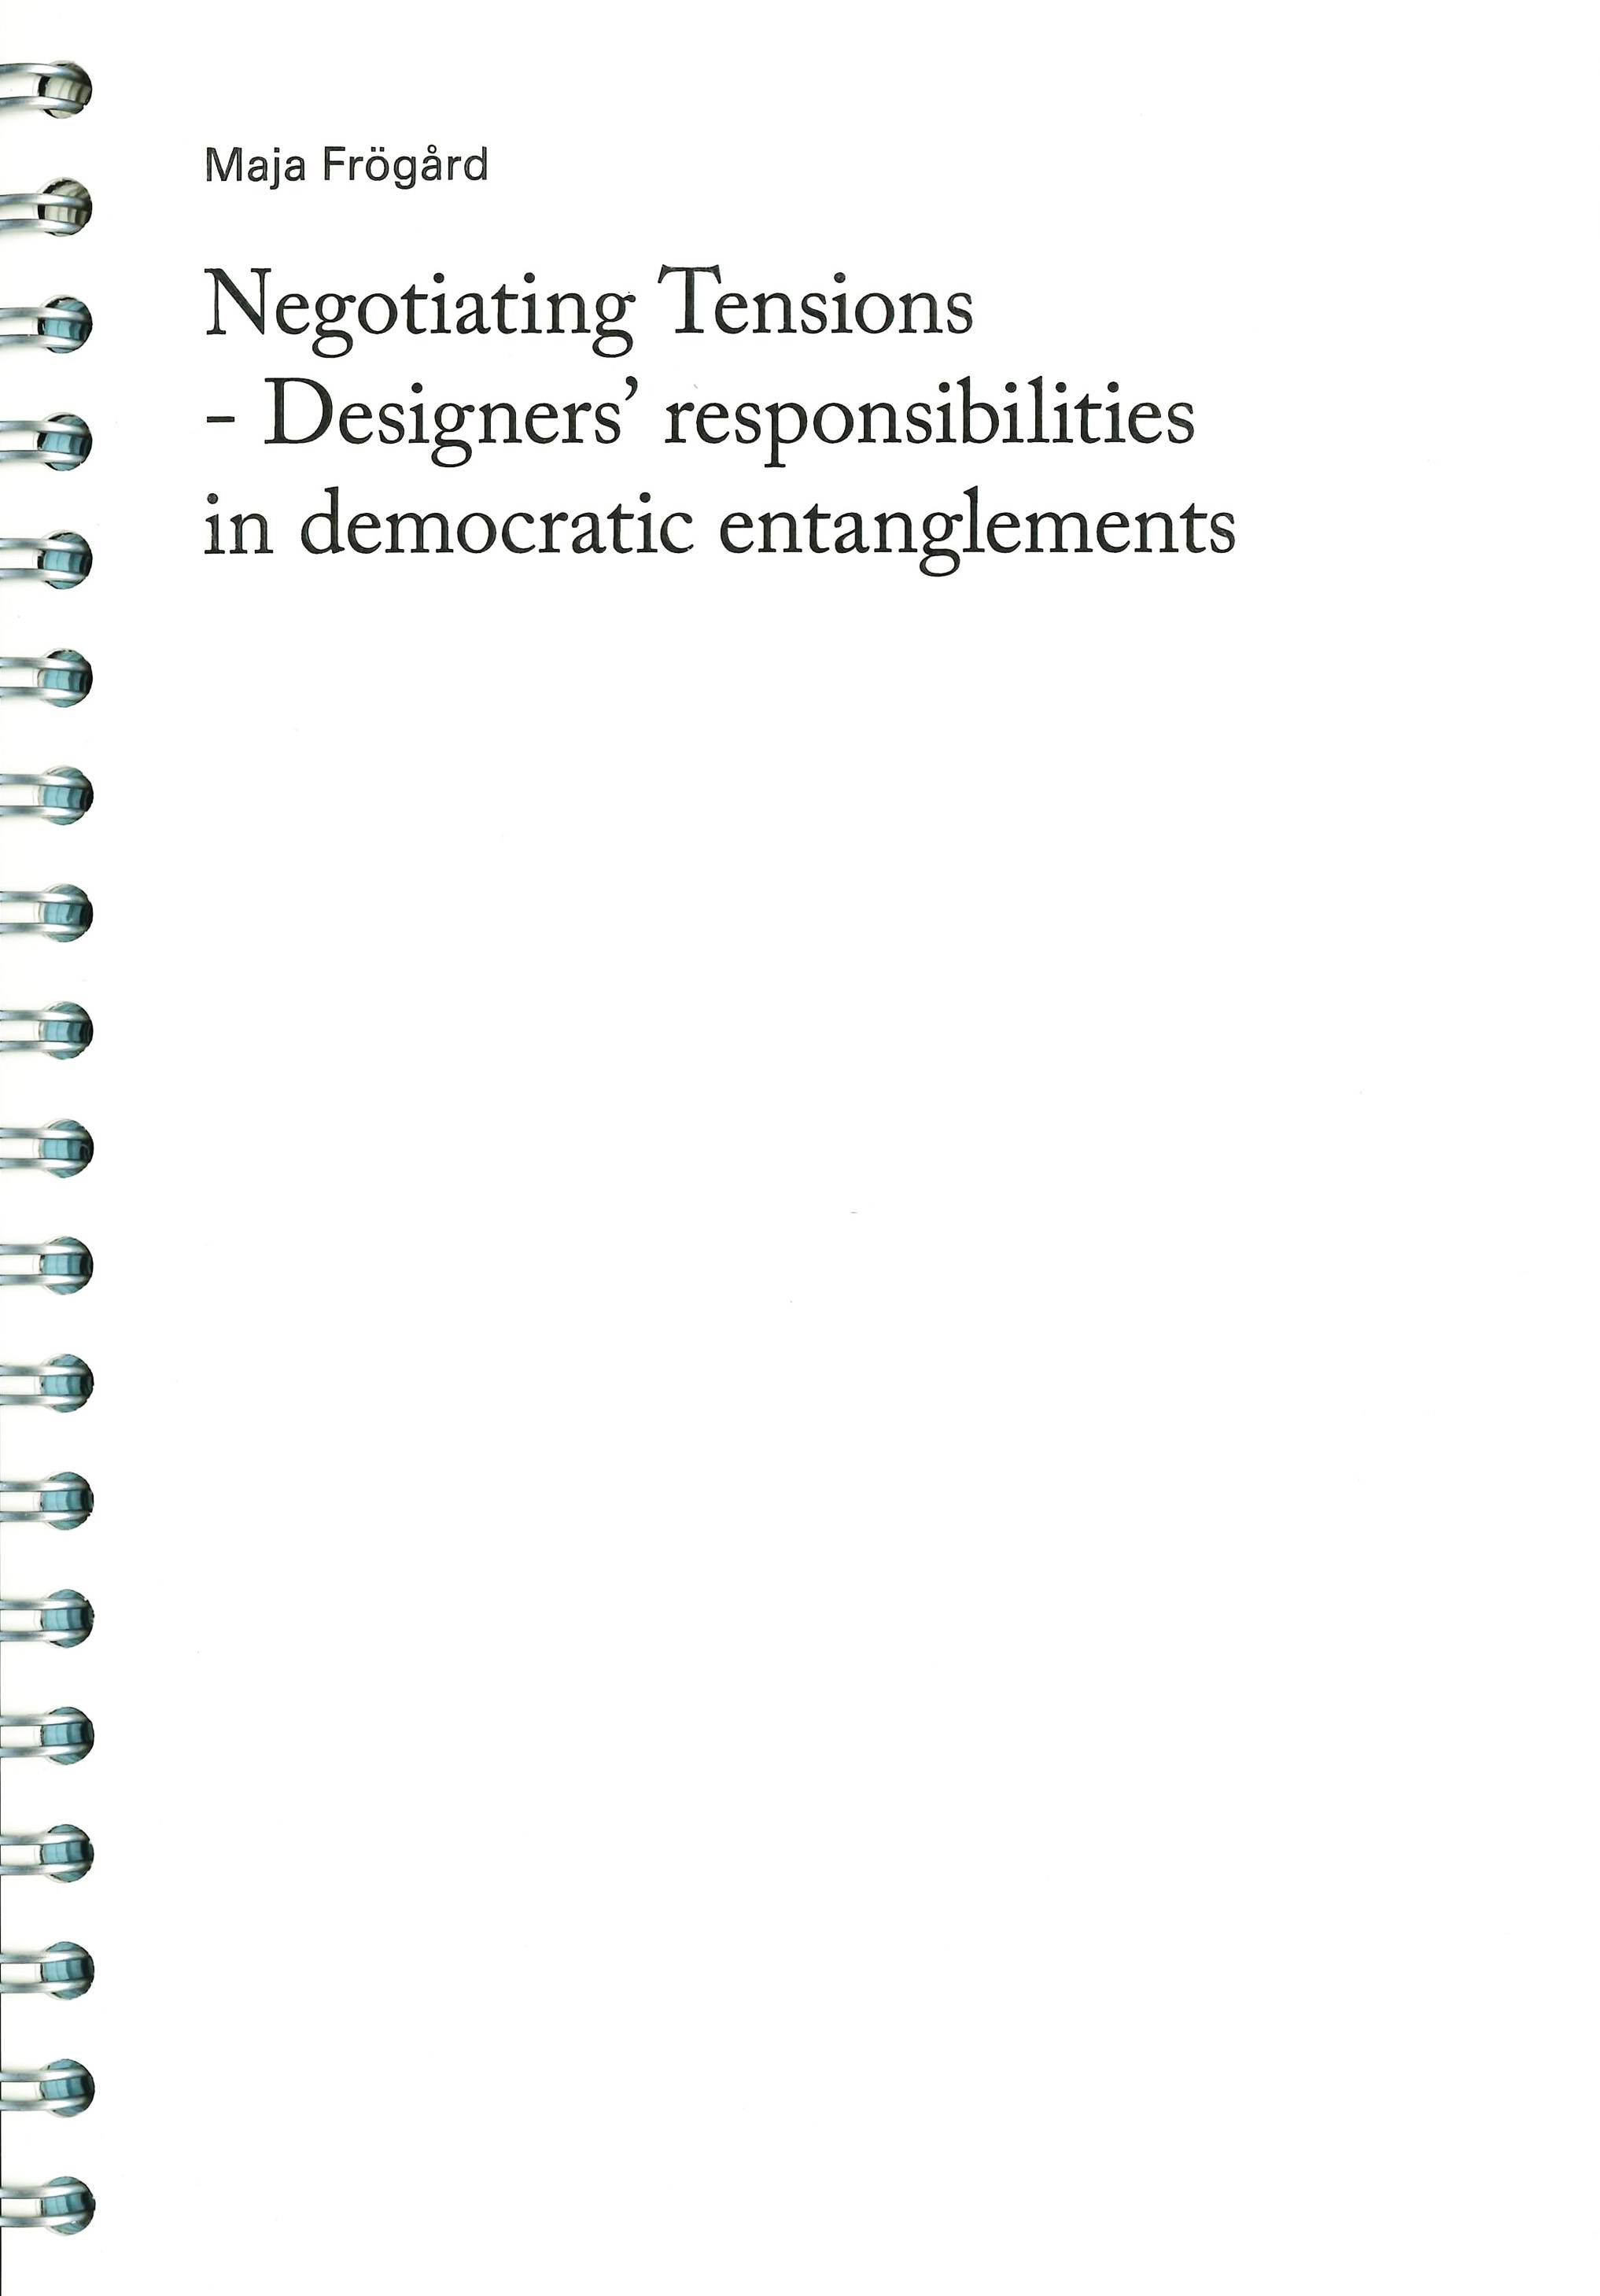 Negotiating Tensions - Designers' responsibilities in democratic entanglements